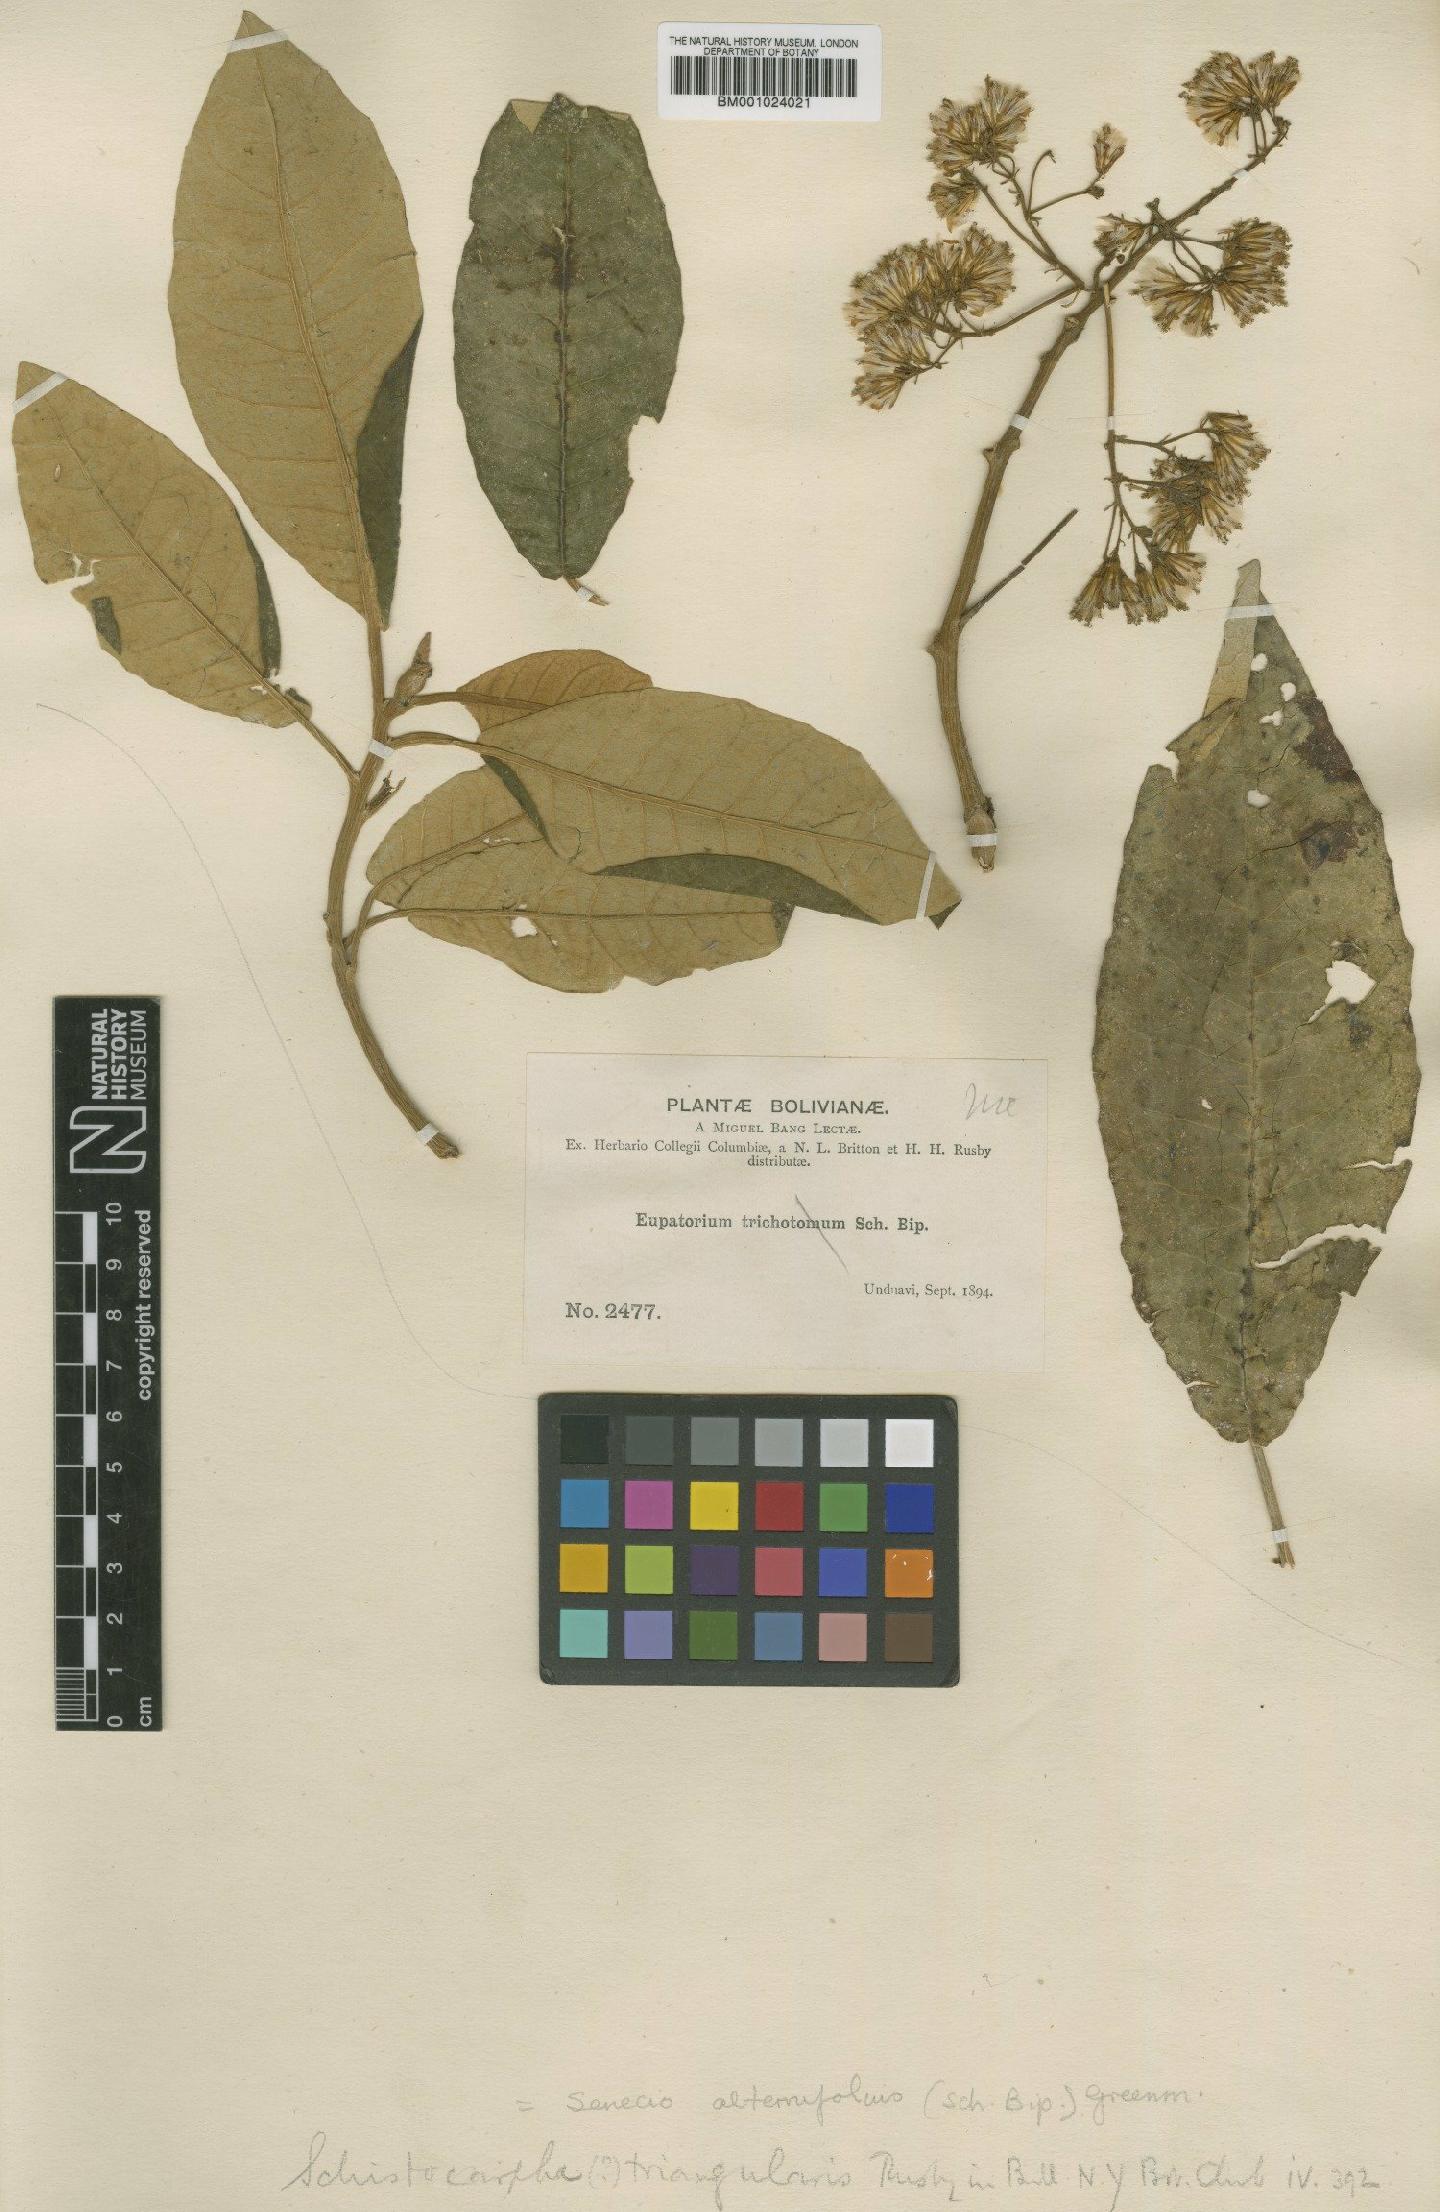 To NHMUK collection (Senecio alternifolius (Rusby) Greenm.; Type; NHMUK:ecatalogue:621862)